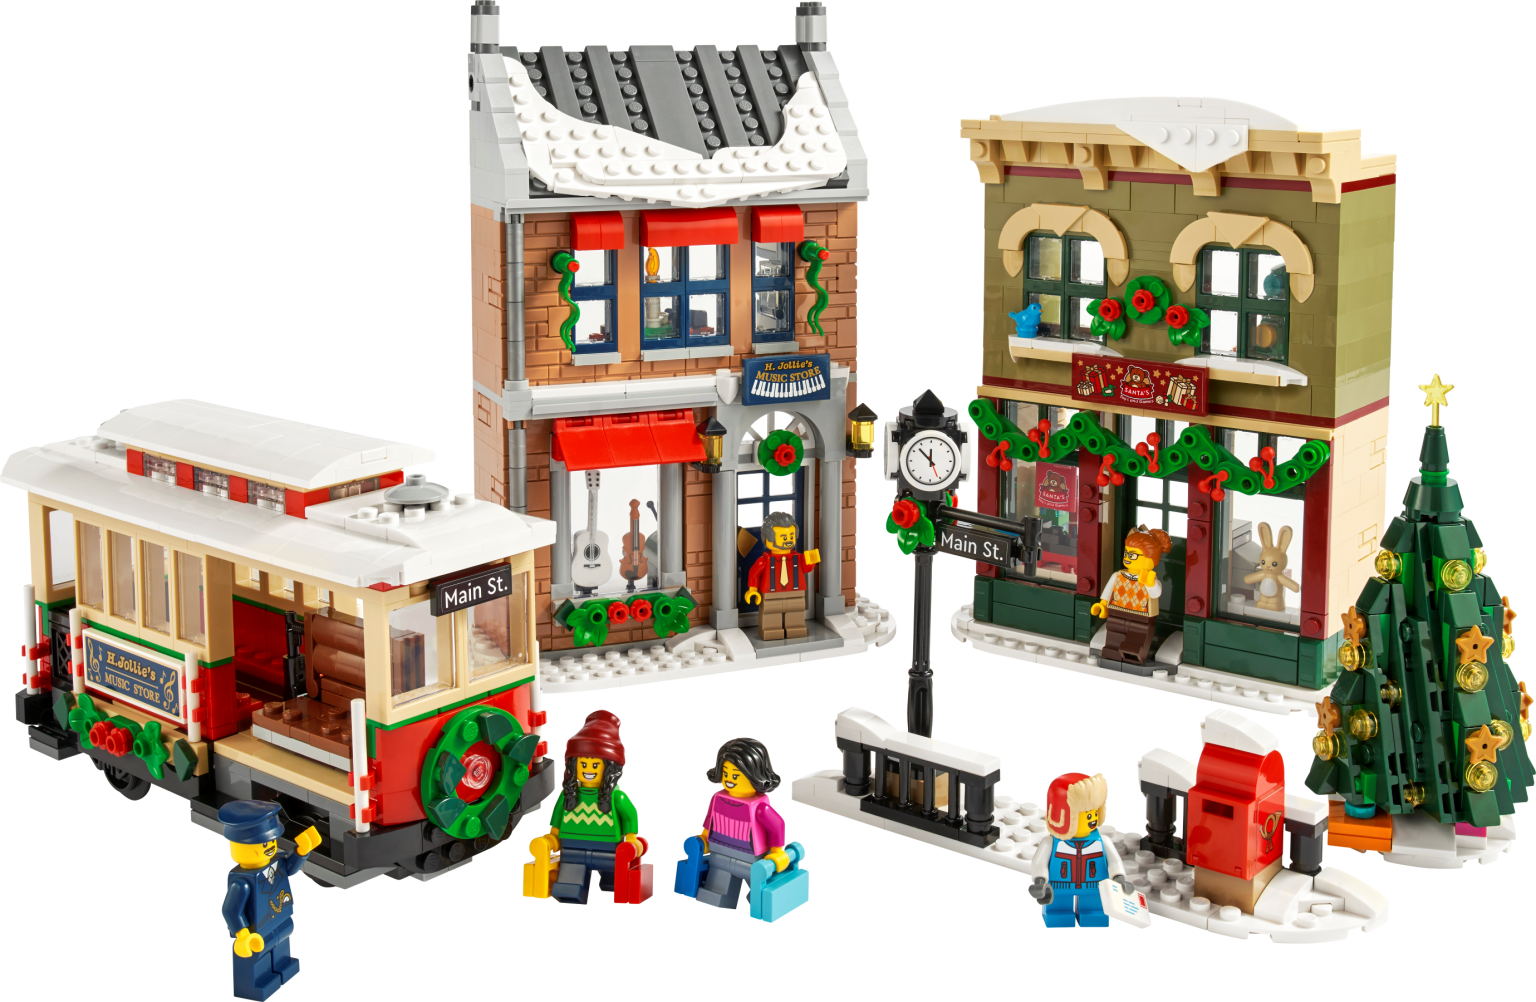 Every LEGO Winter Village set ever made